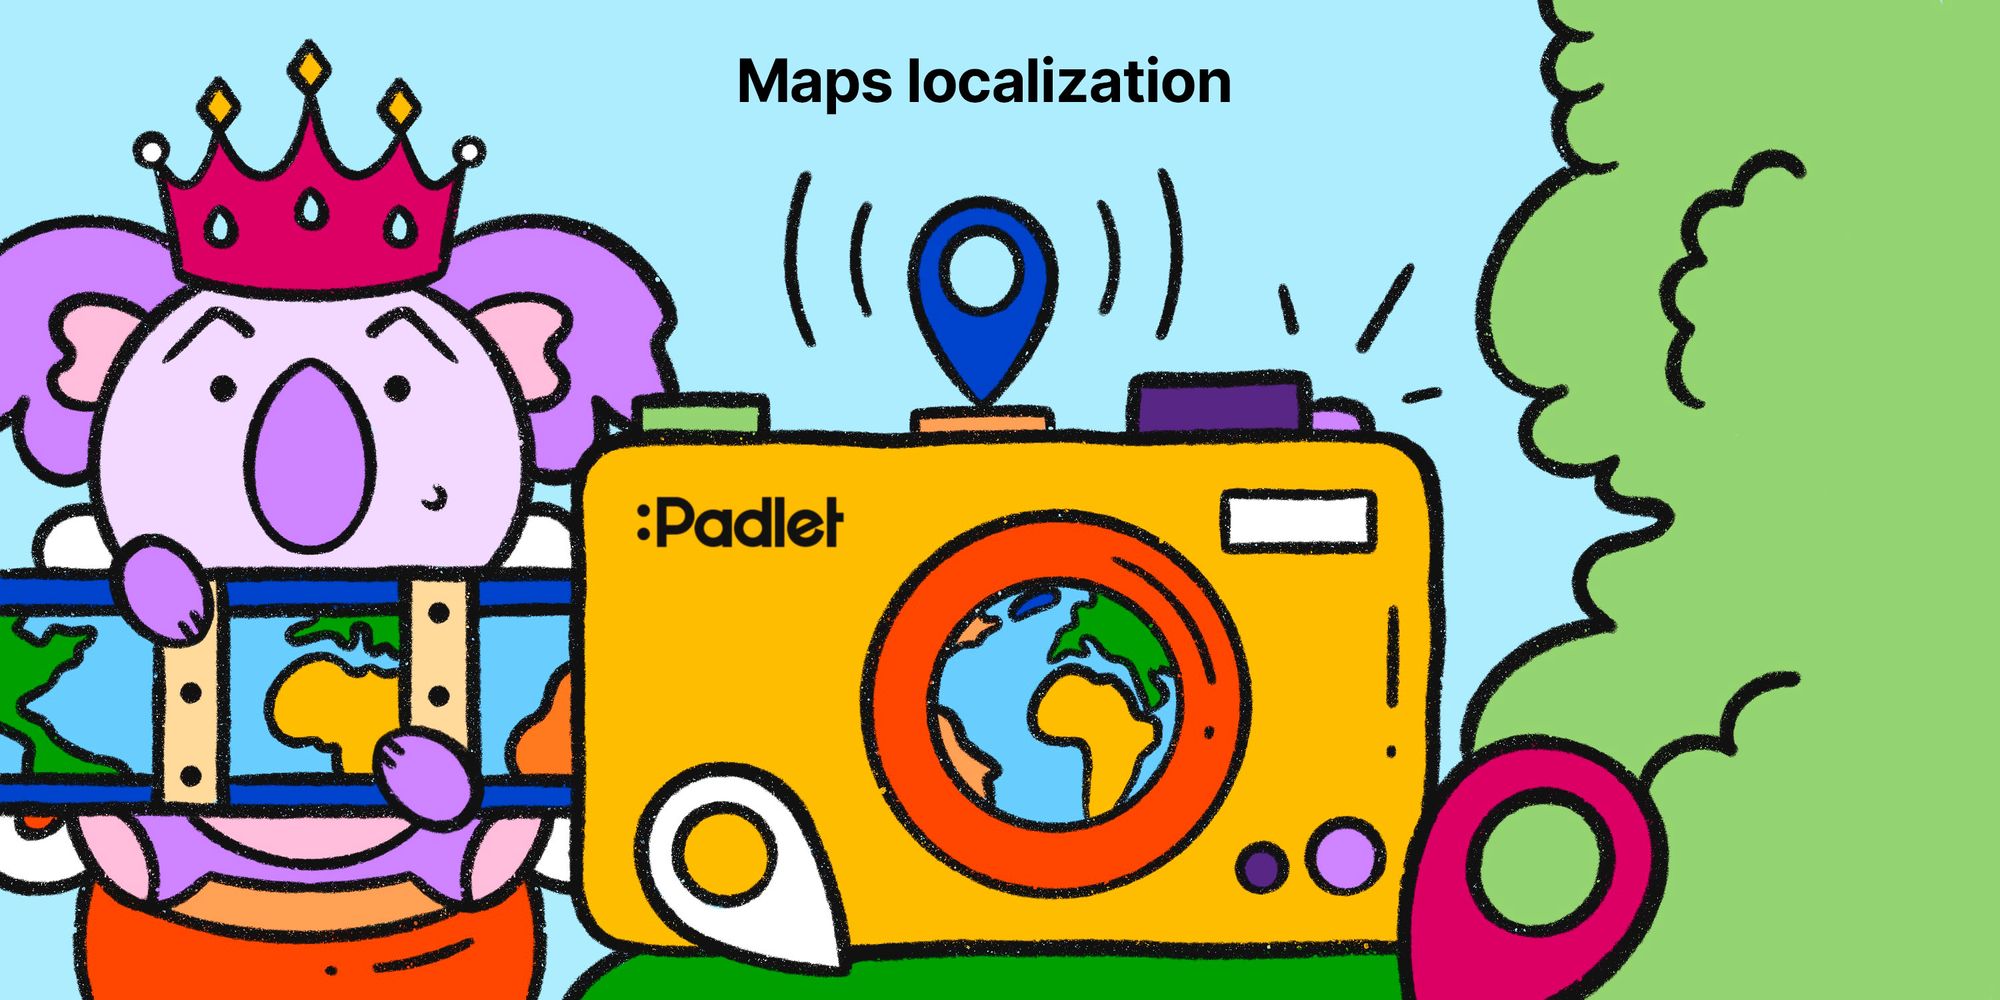 Maps localization